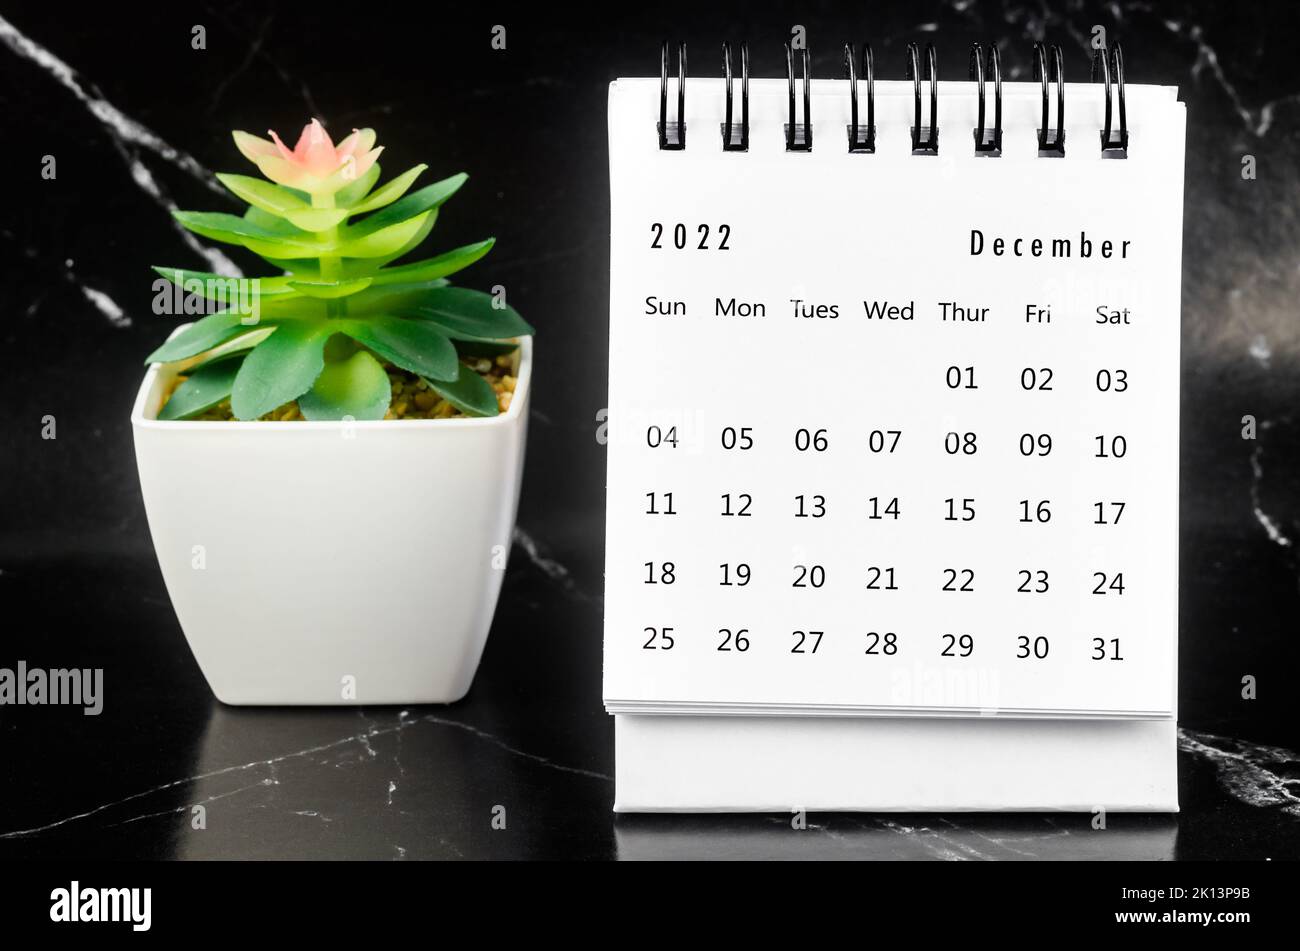 December 2022 Monthly desk calendar for 2022 year on black marble background. Stock Photo